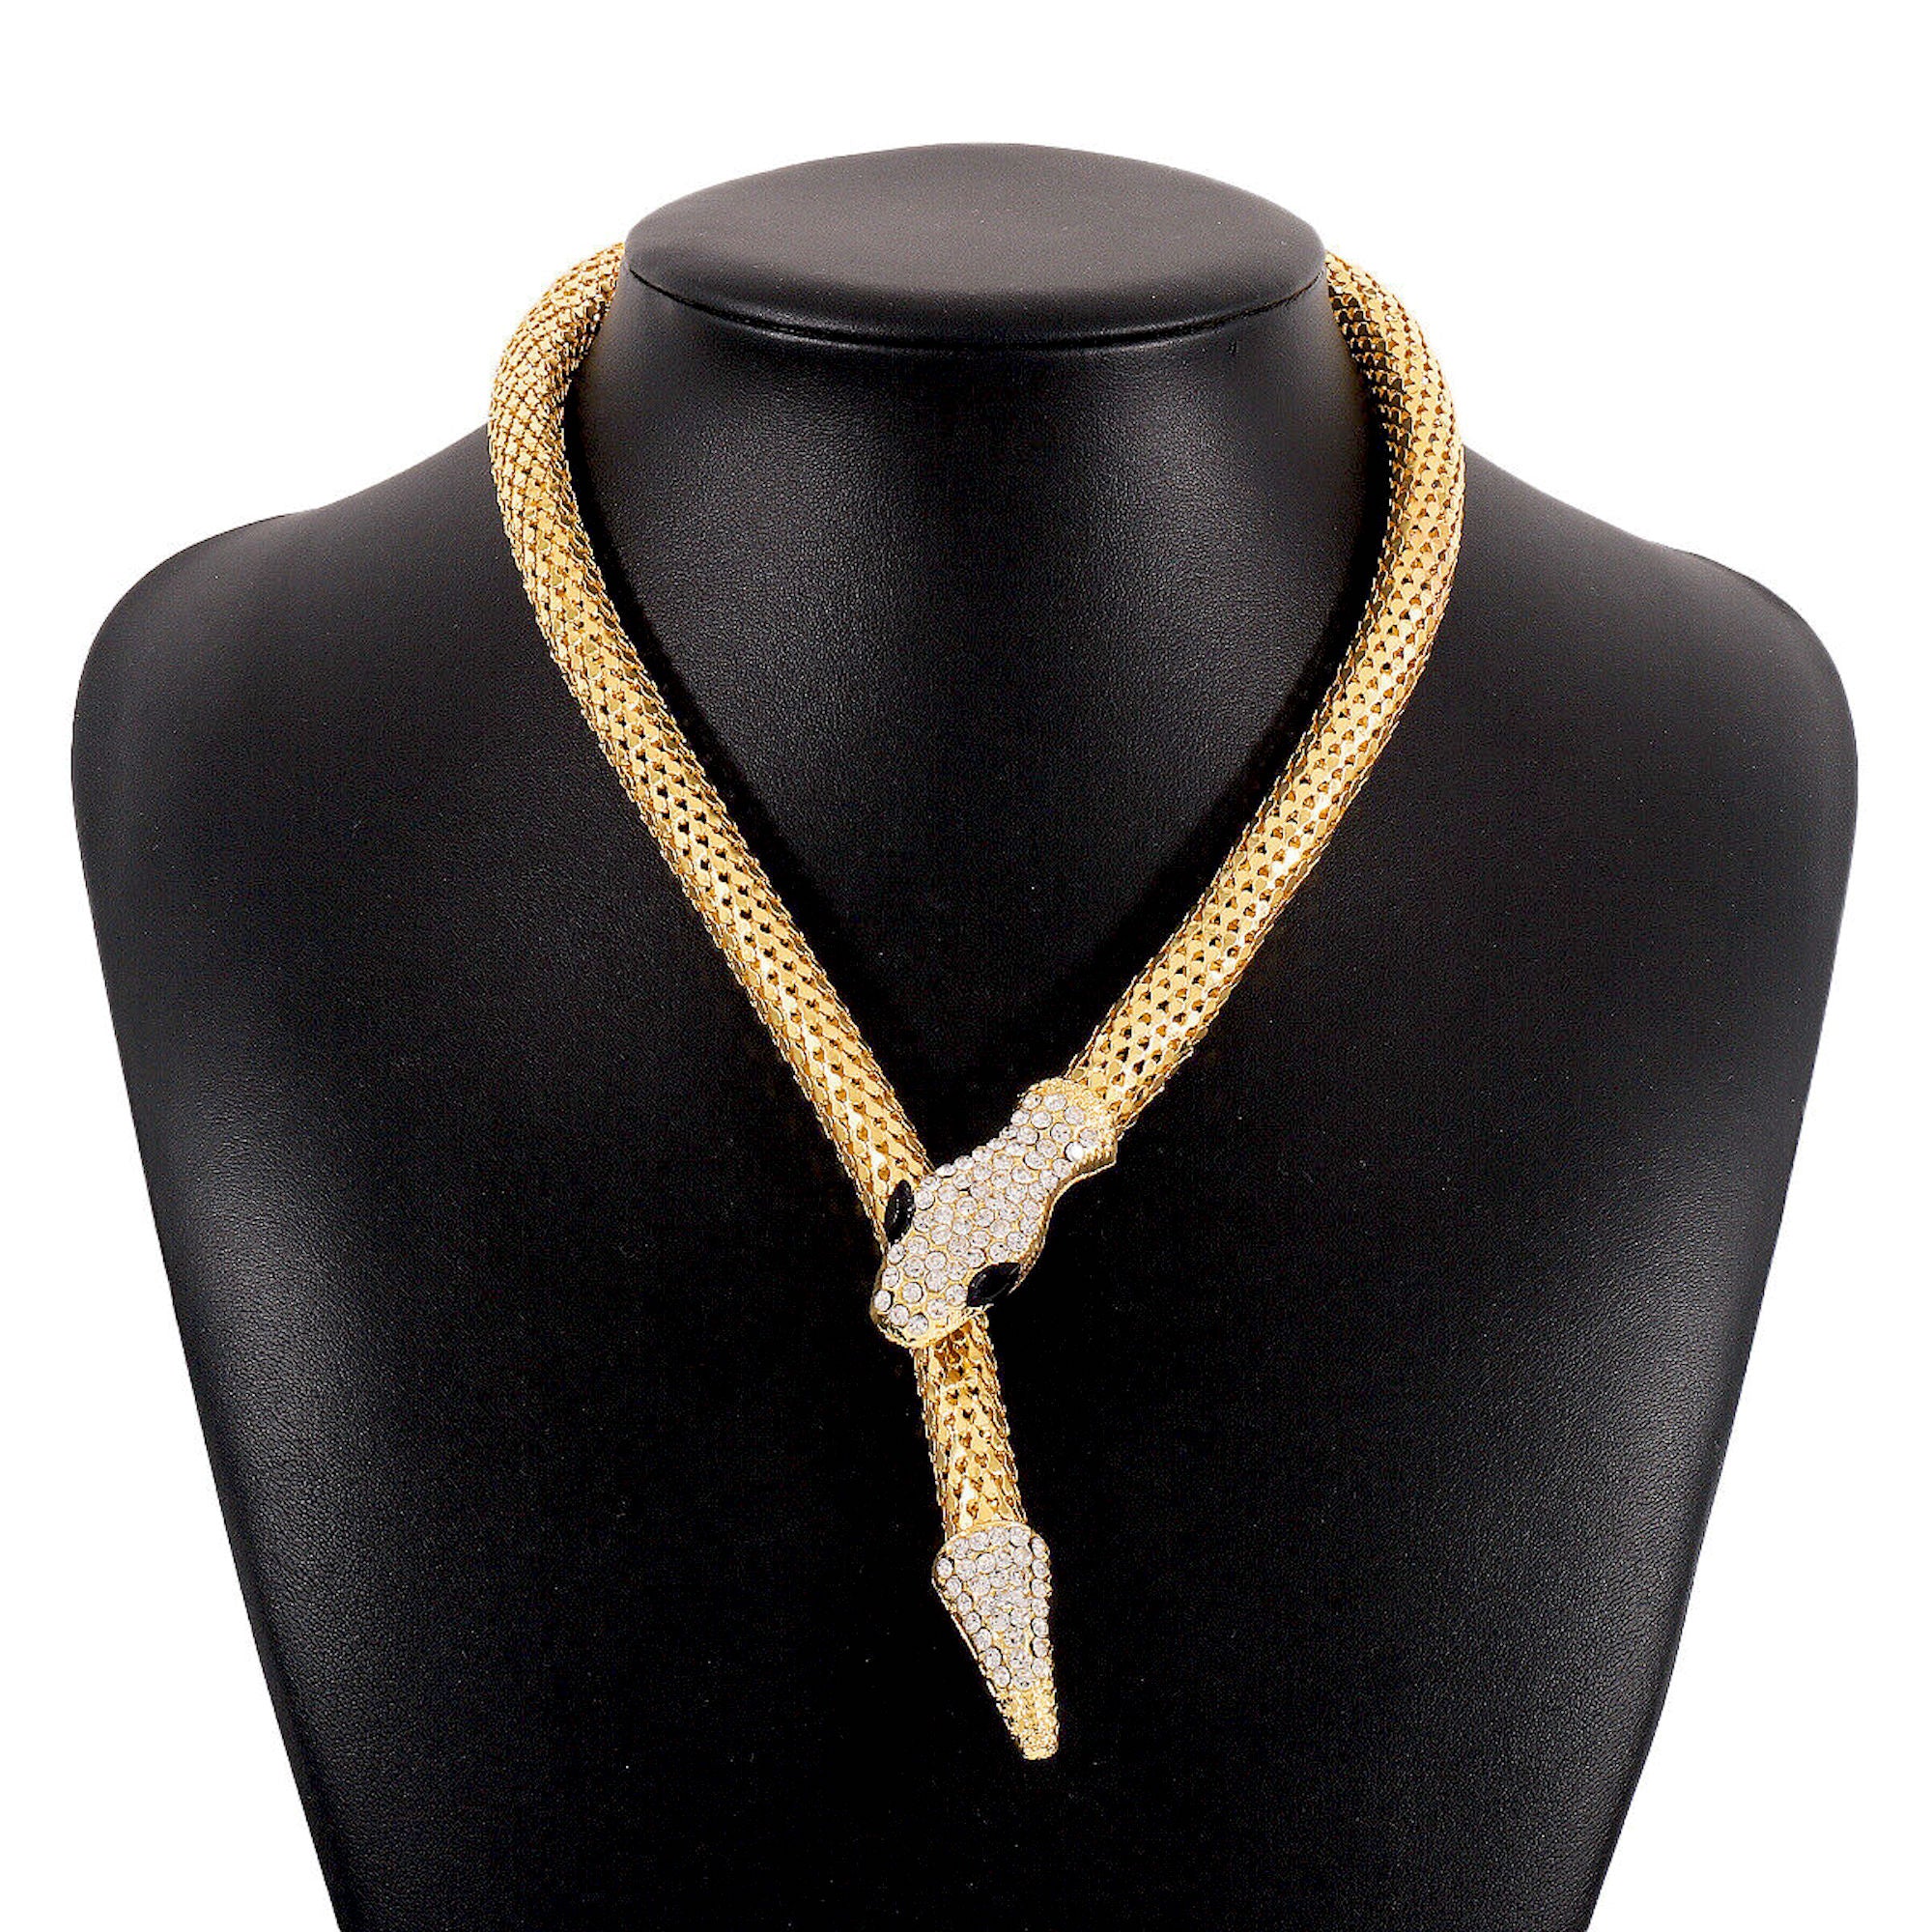 9ct gold snake necklace | Snake necklace | Jethro Marles